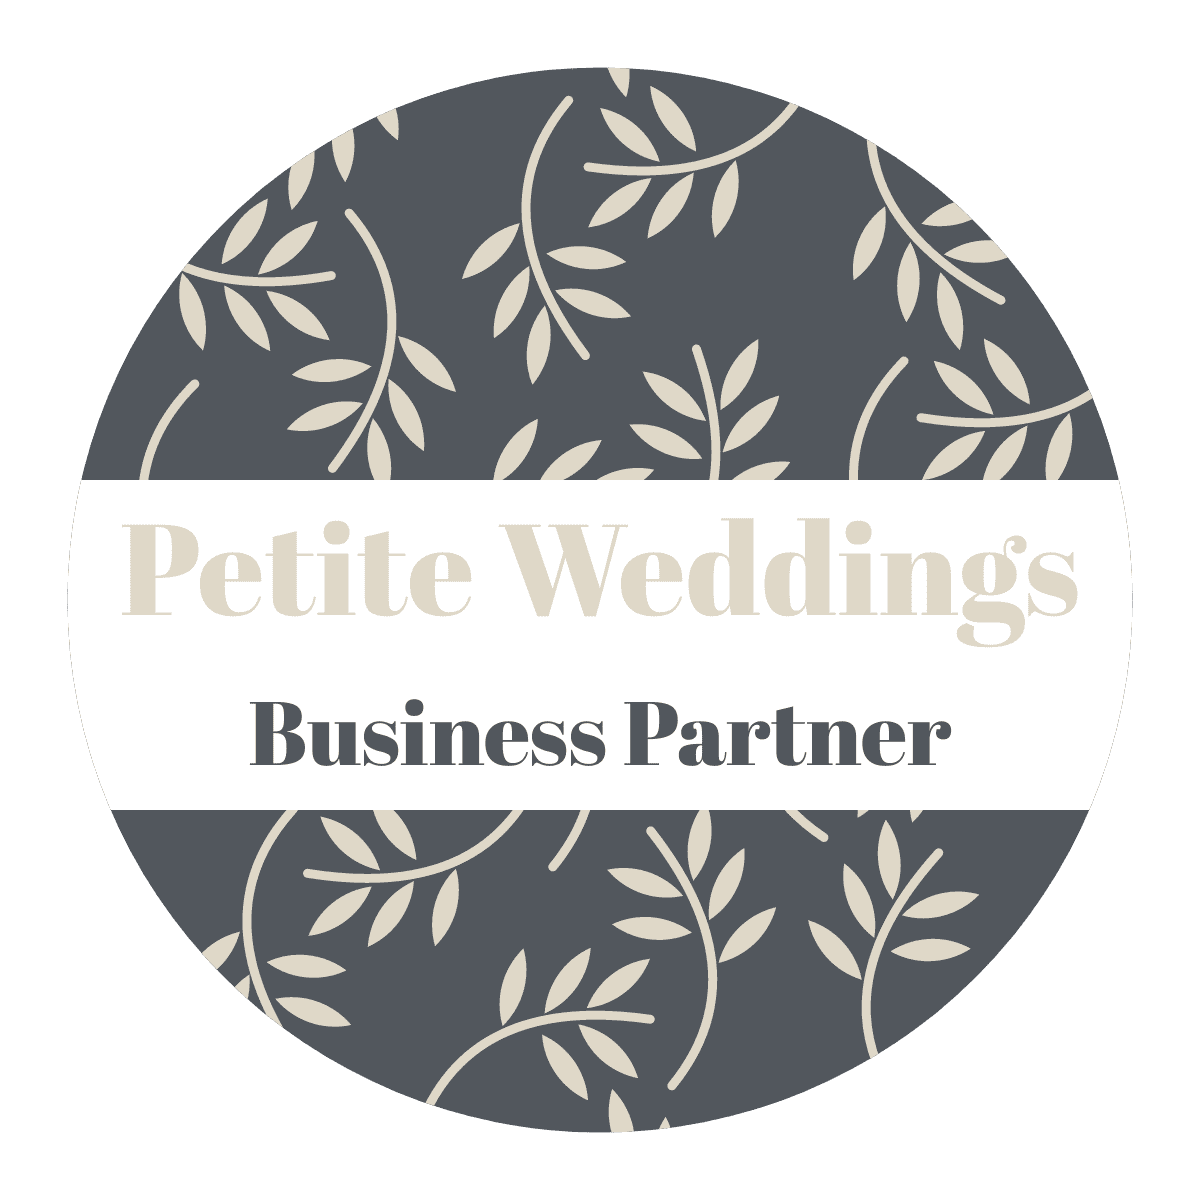 Petite Weddings Business Partner logo